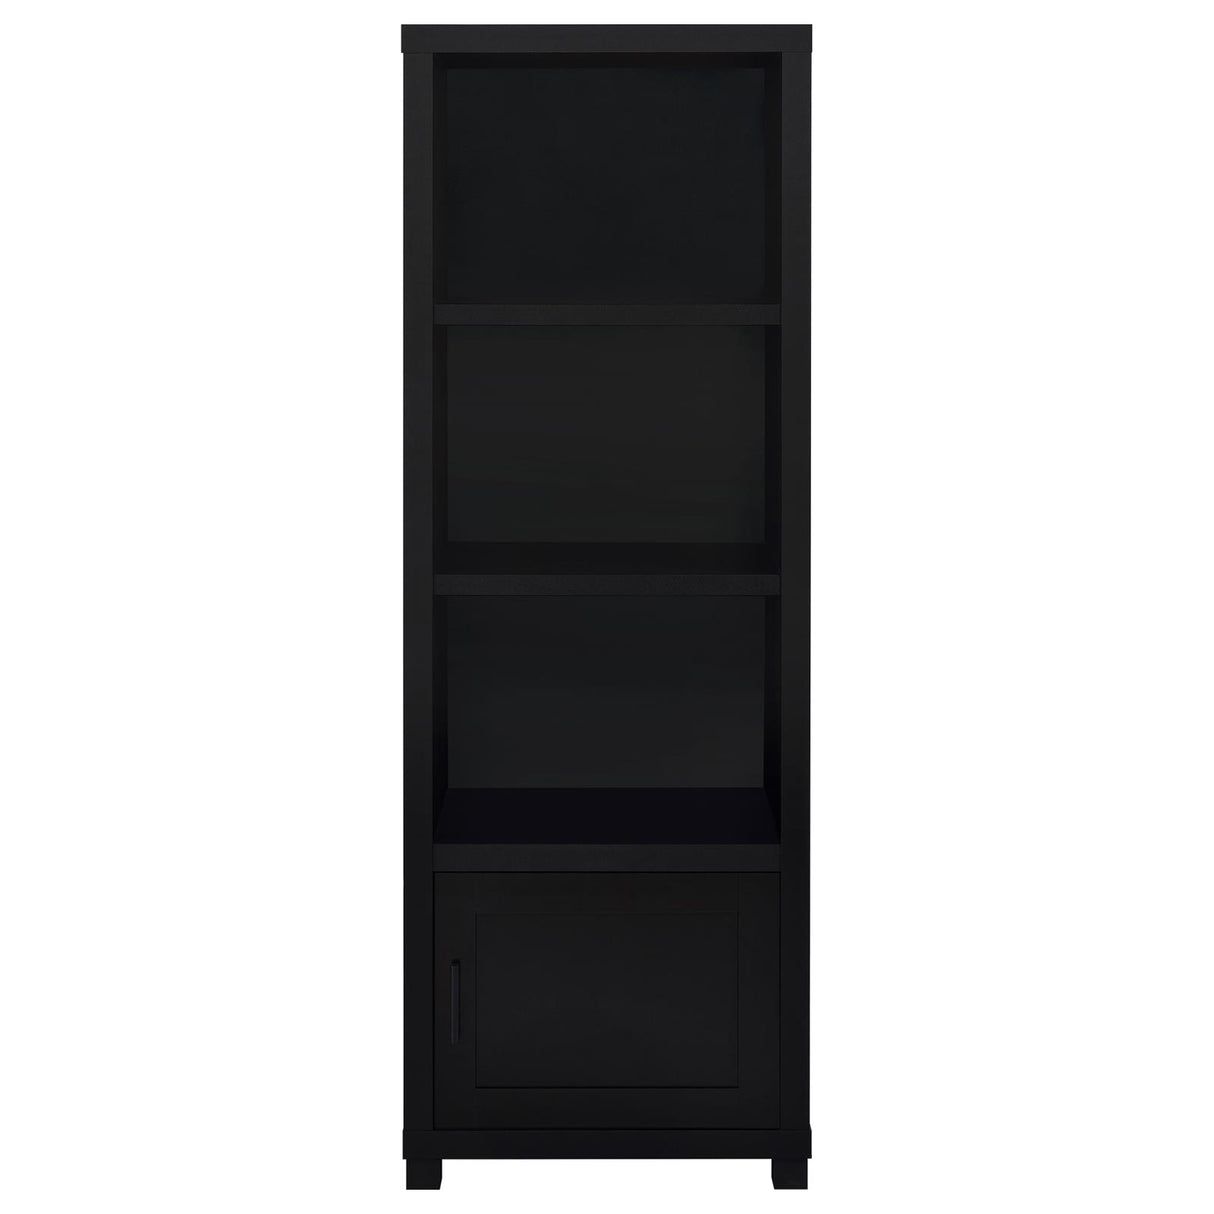 Jupiter 3-shelf Media Tower Bookcase with Storage Cabinet Black - 707756 - Luna Furniture